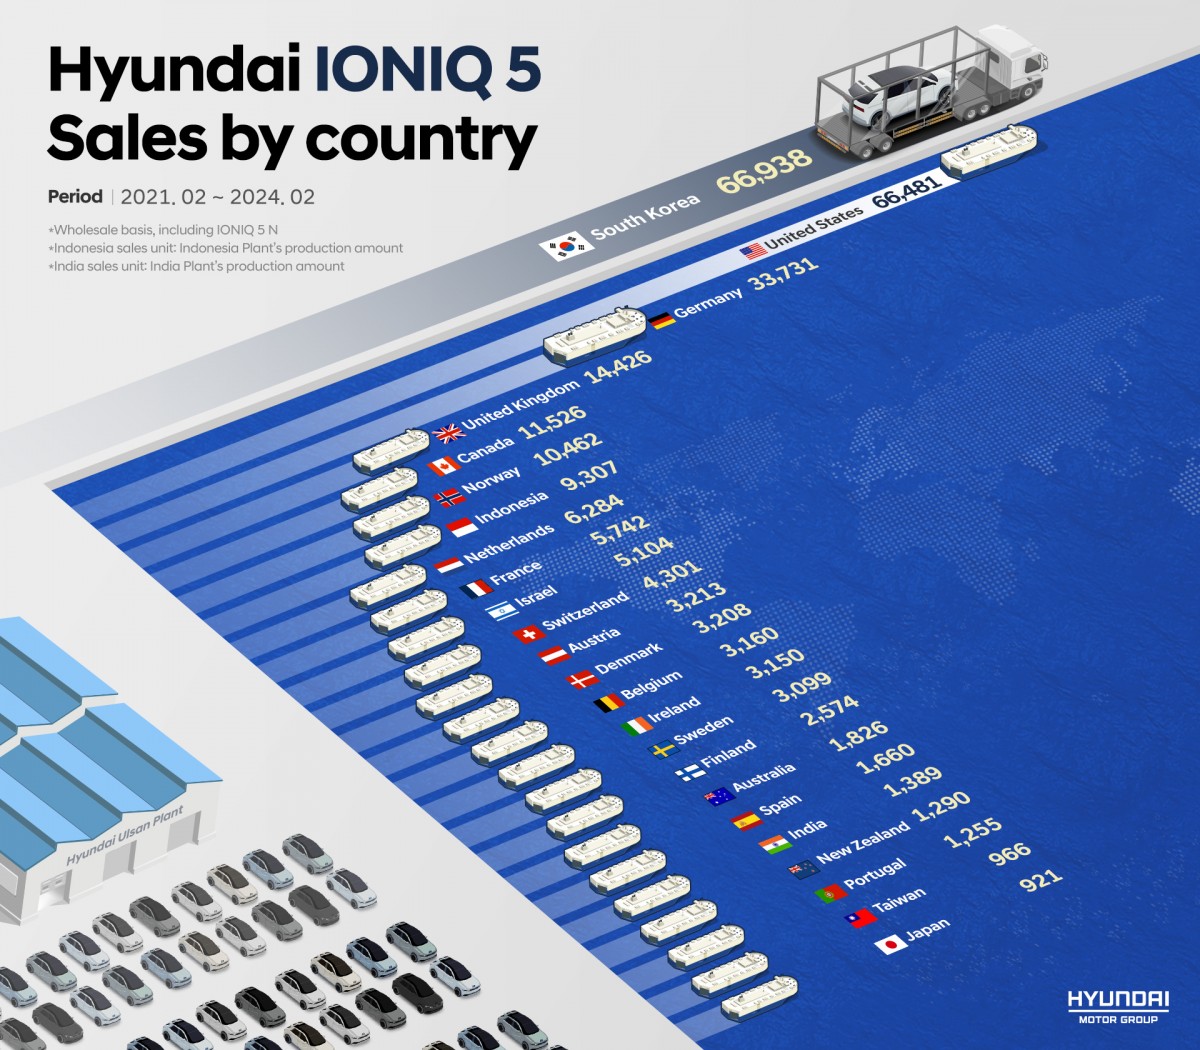 Hyundai has sold 262,000 Ioniq 5 EVs so far